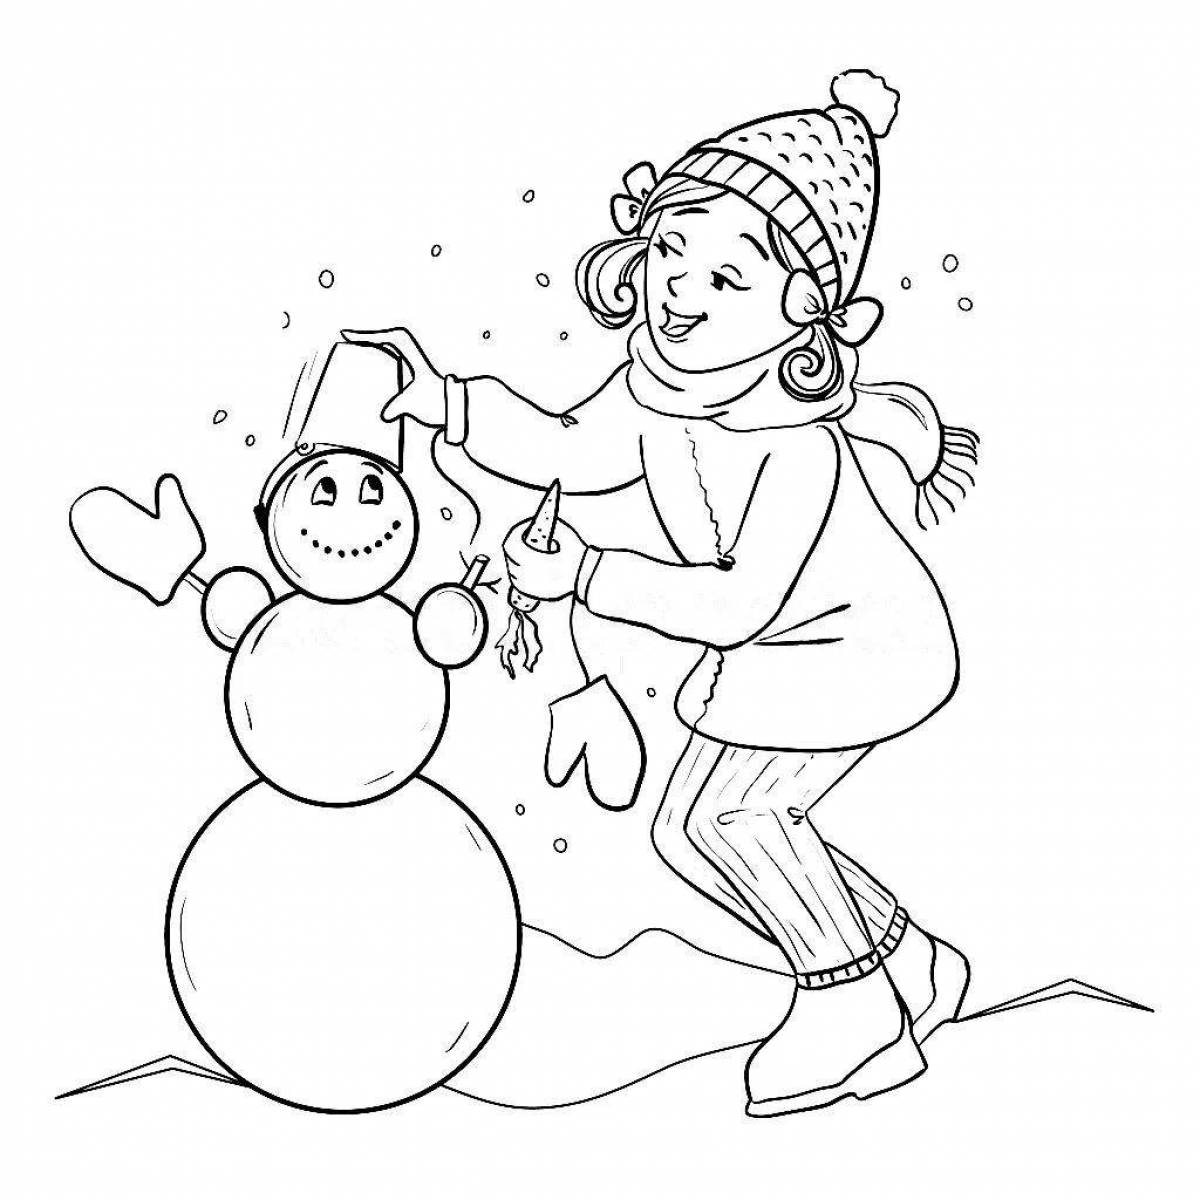 Adorable snowman simulation coloring book